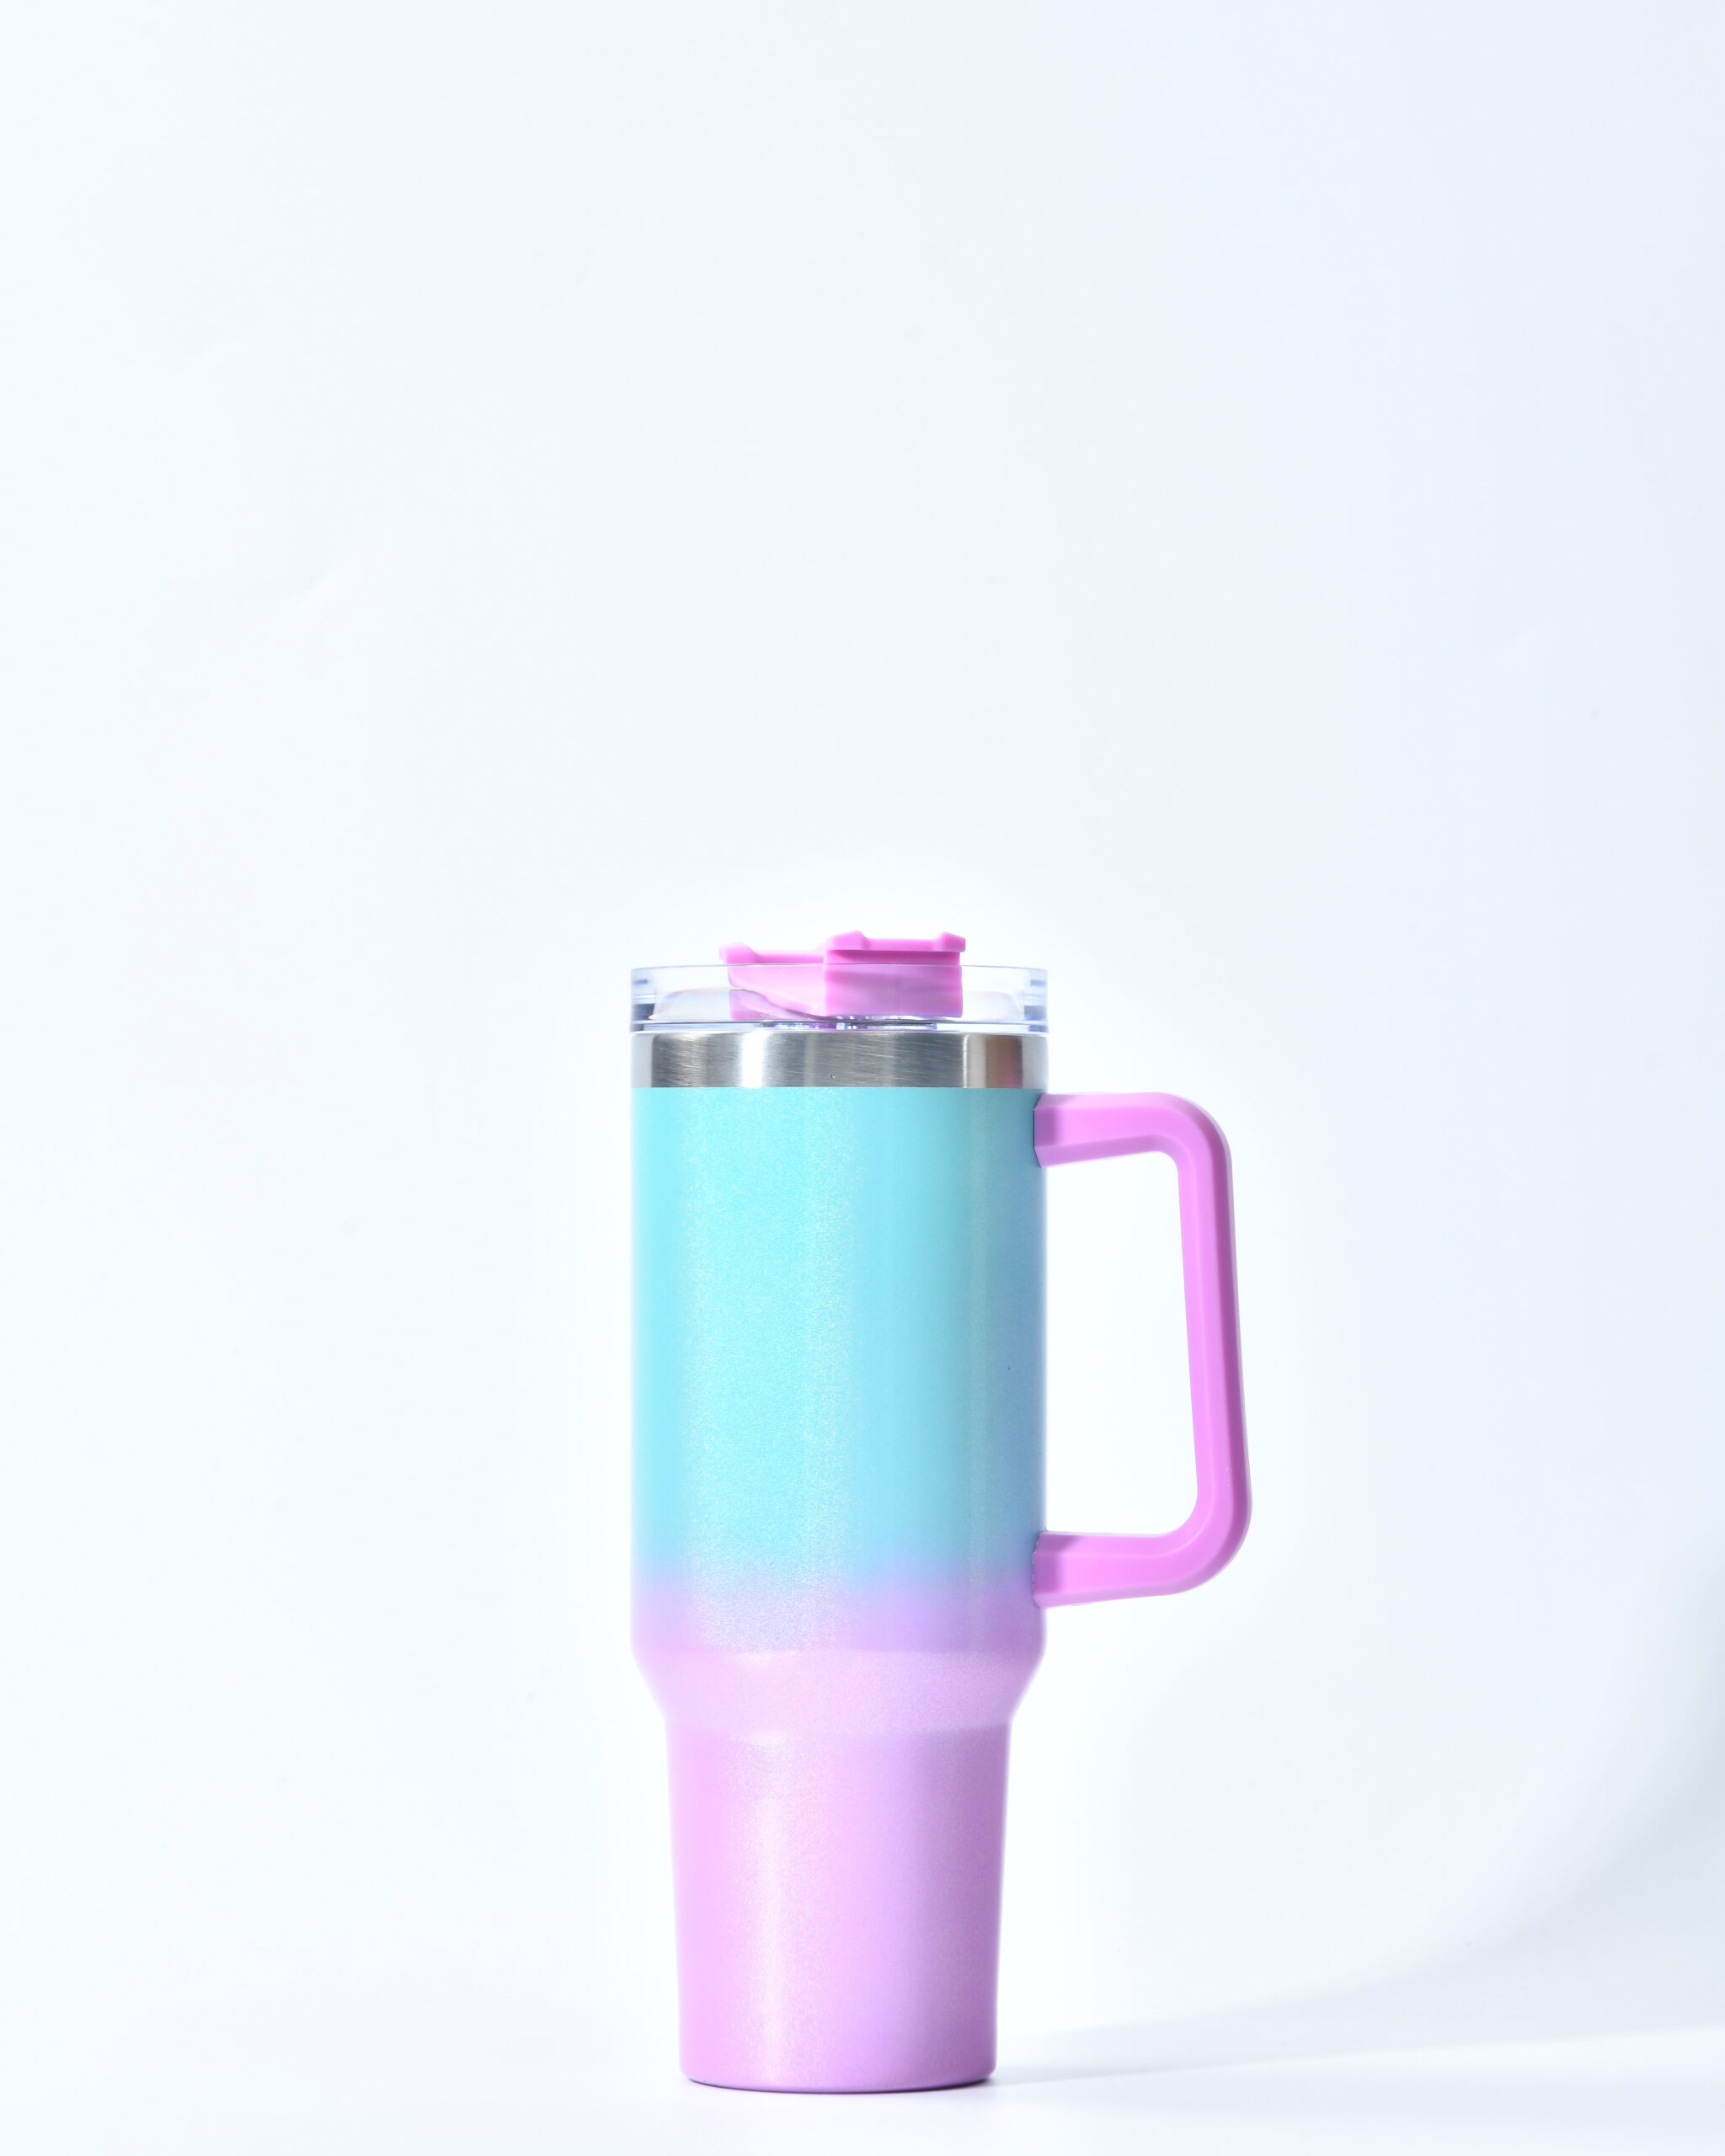 Exclusive Stanley Tumbler Glitter 40oz Cup Purple-aqua Gradient